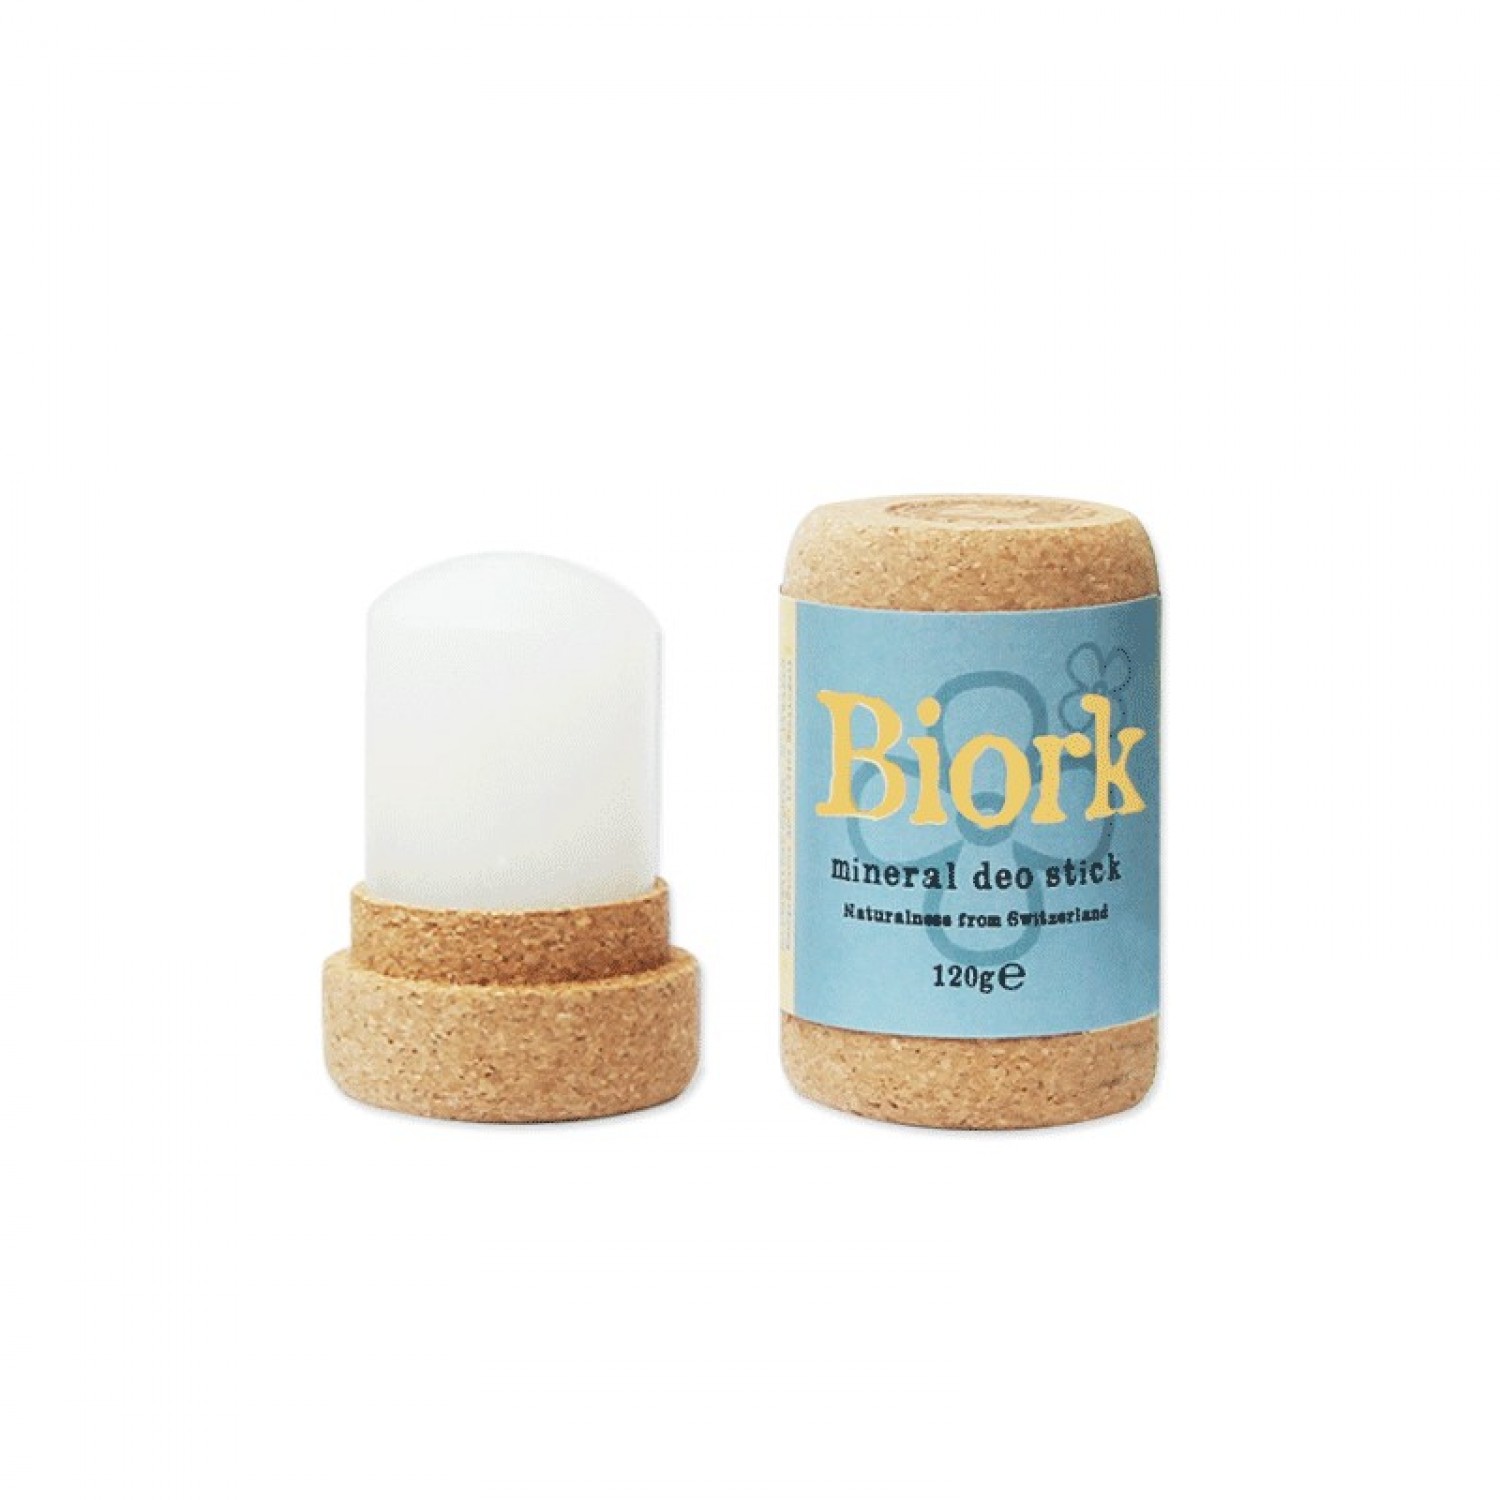 Biork Ecological Crystal Stick Deodorant